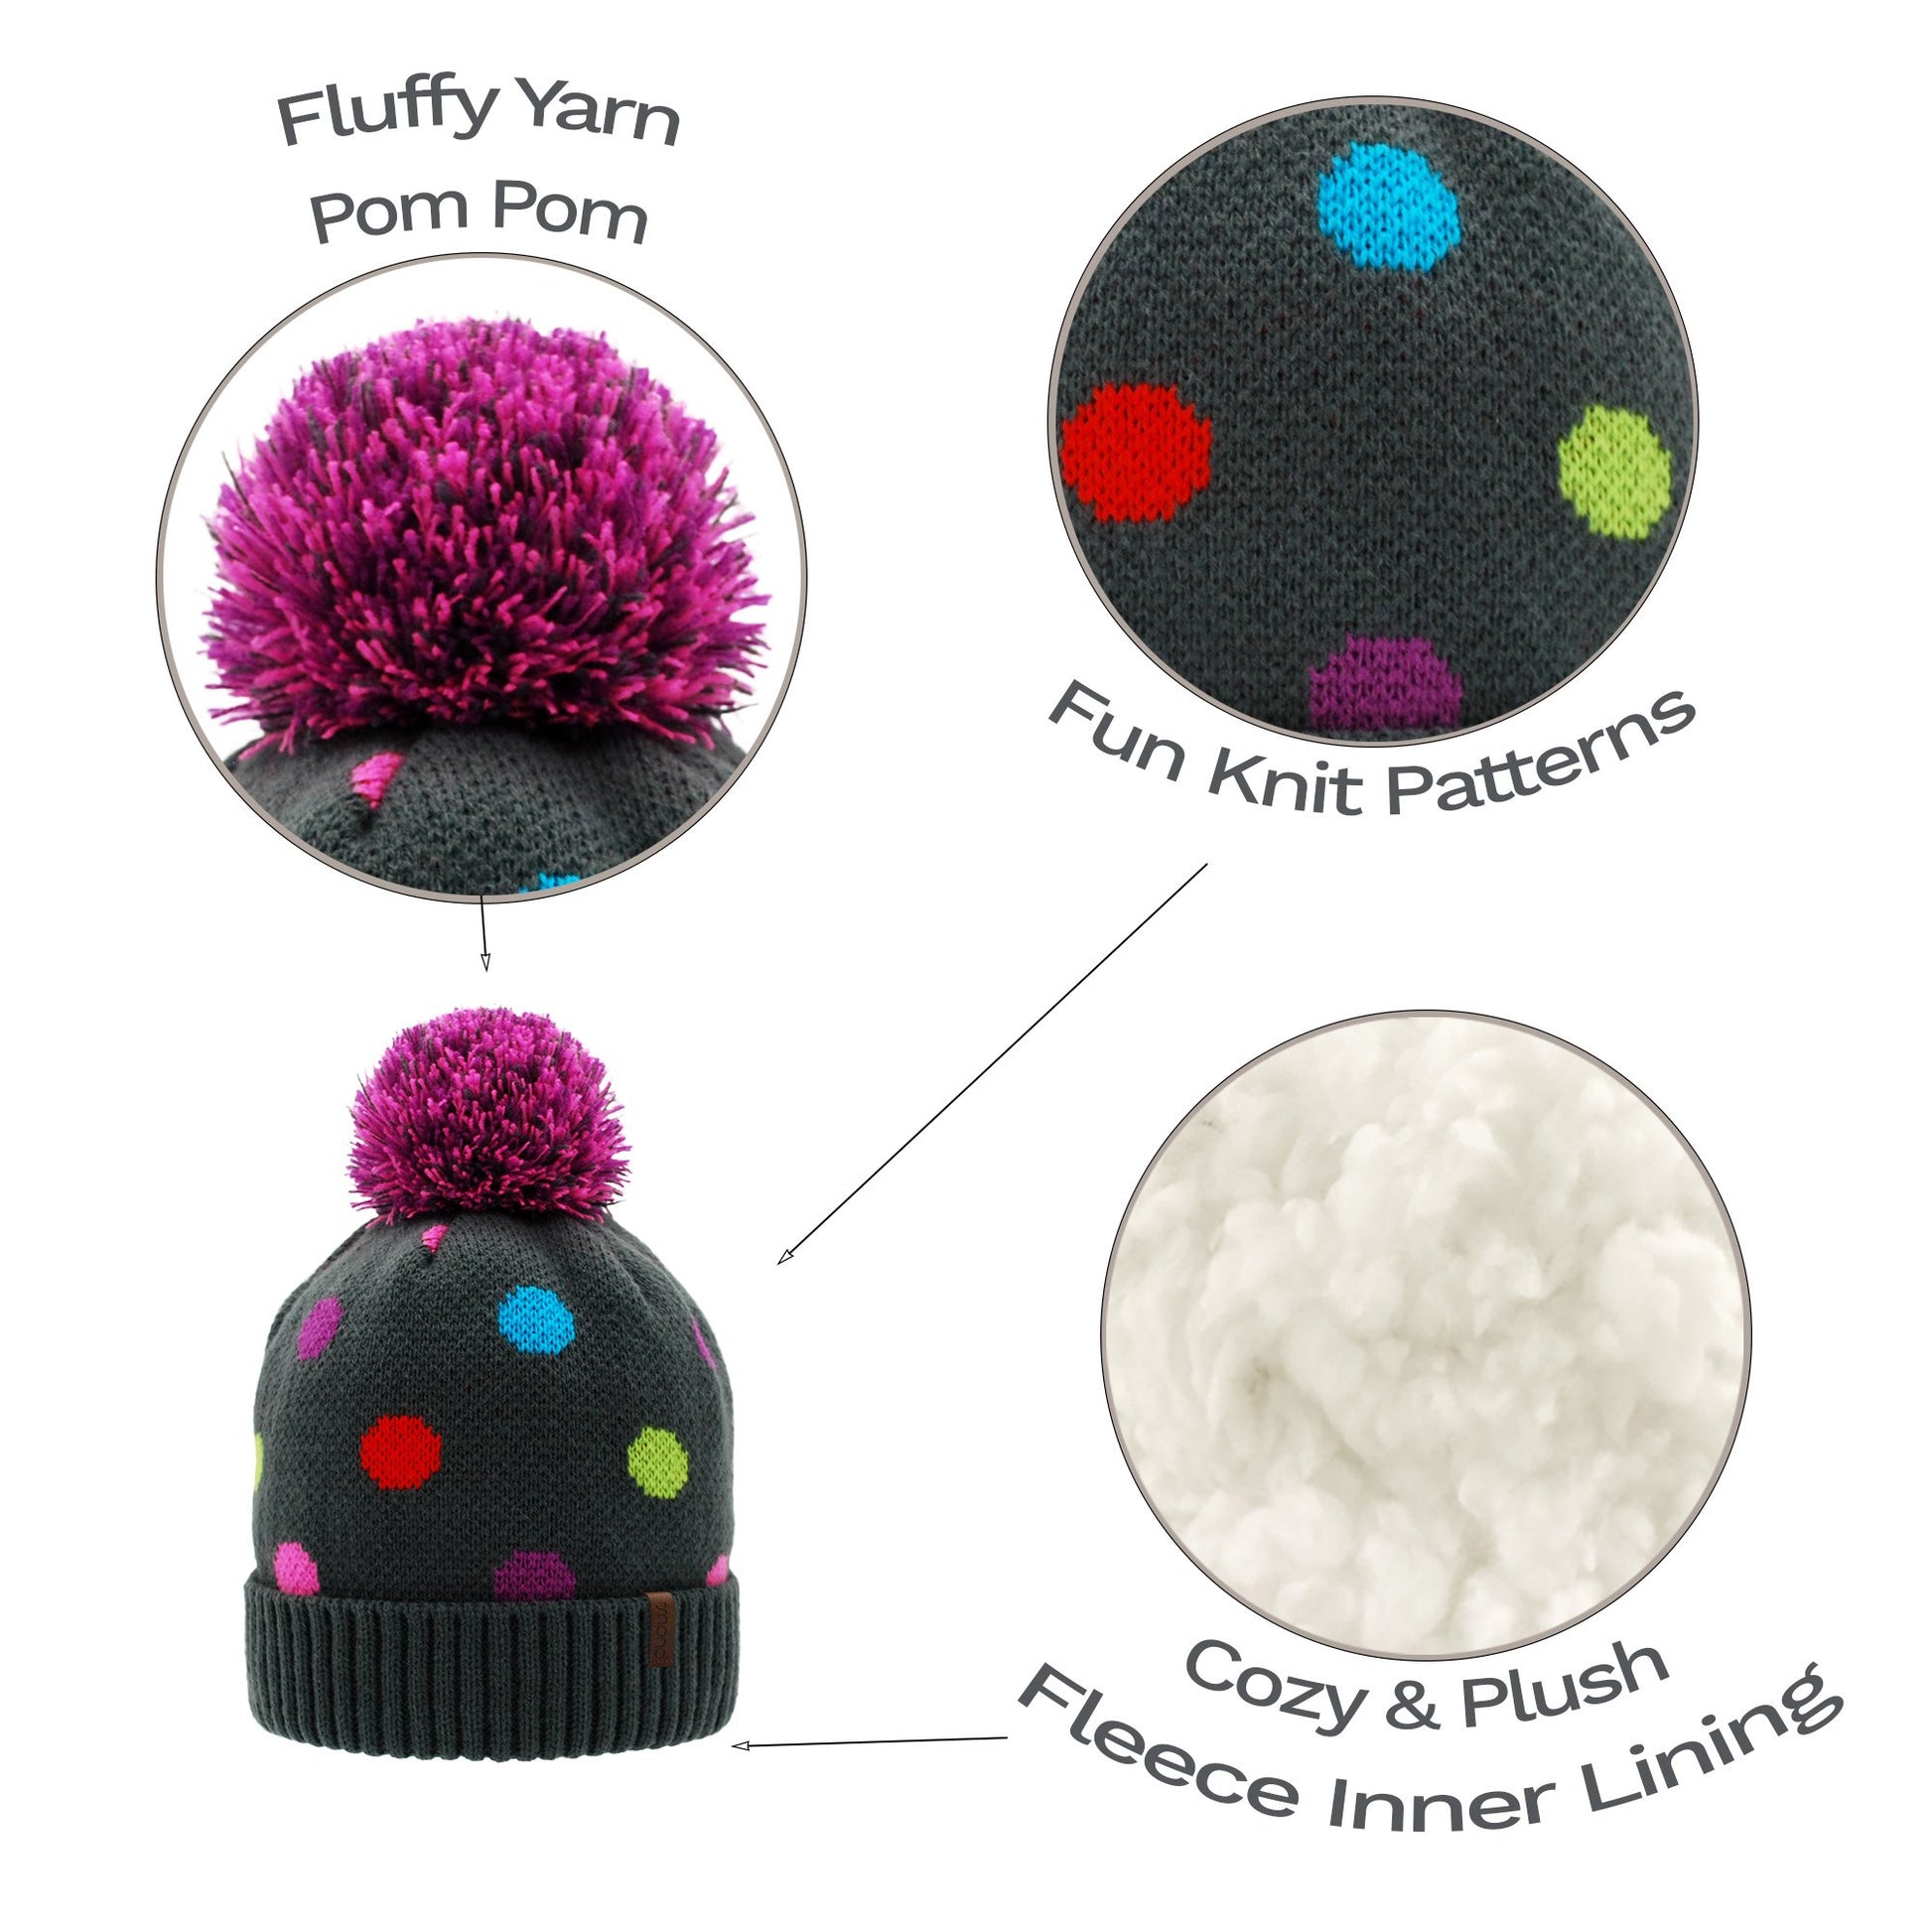 Beanie Winter Hat | Polka Dot Multi